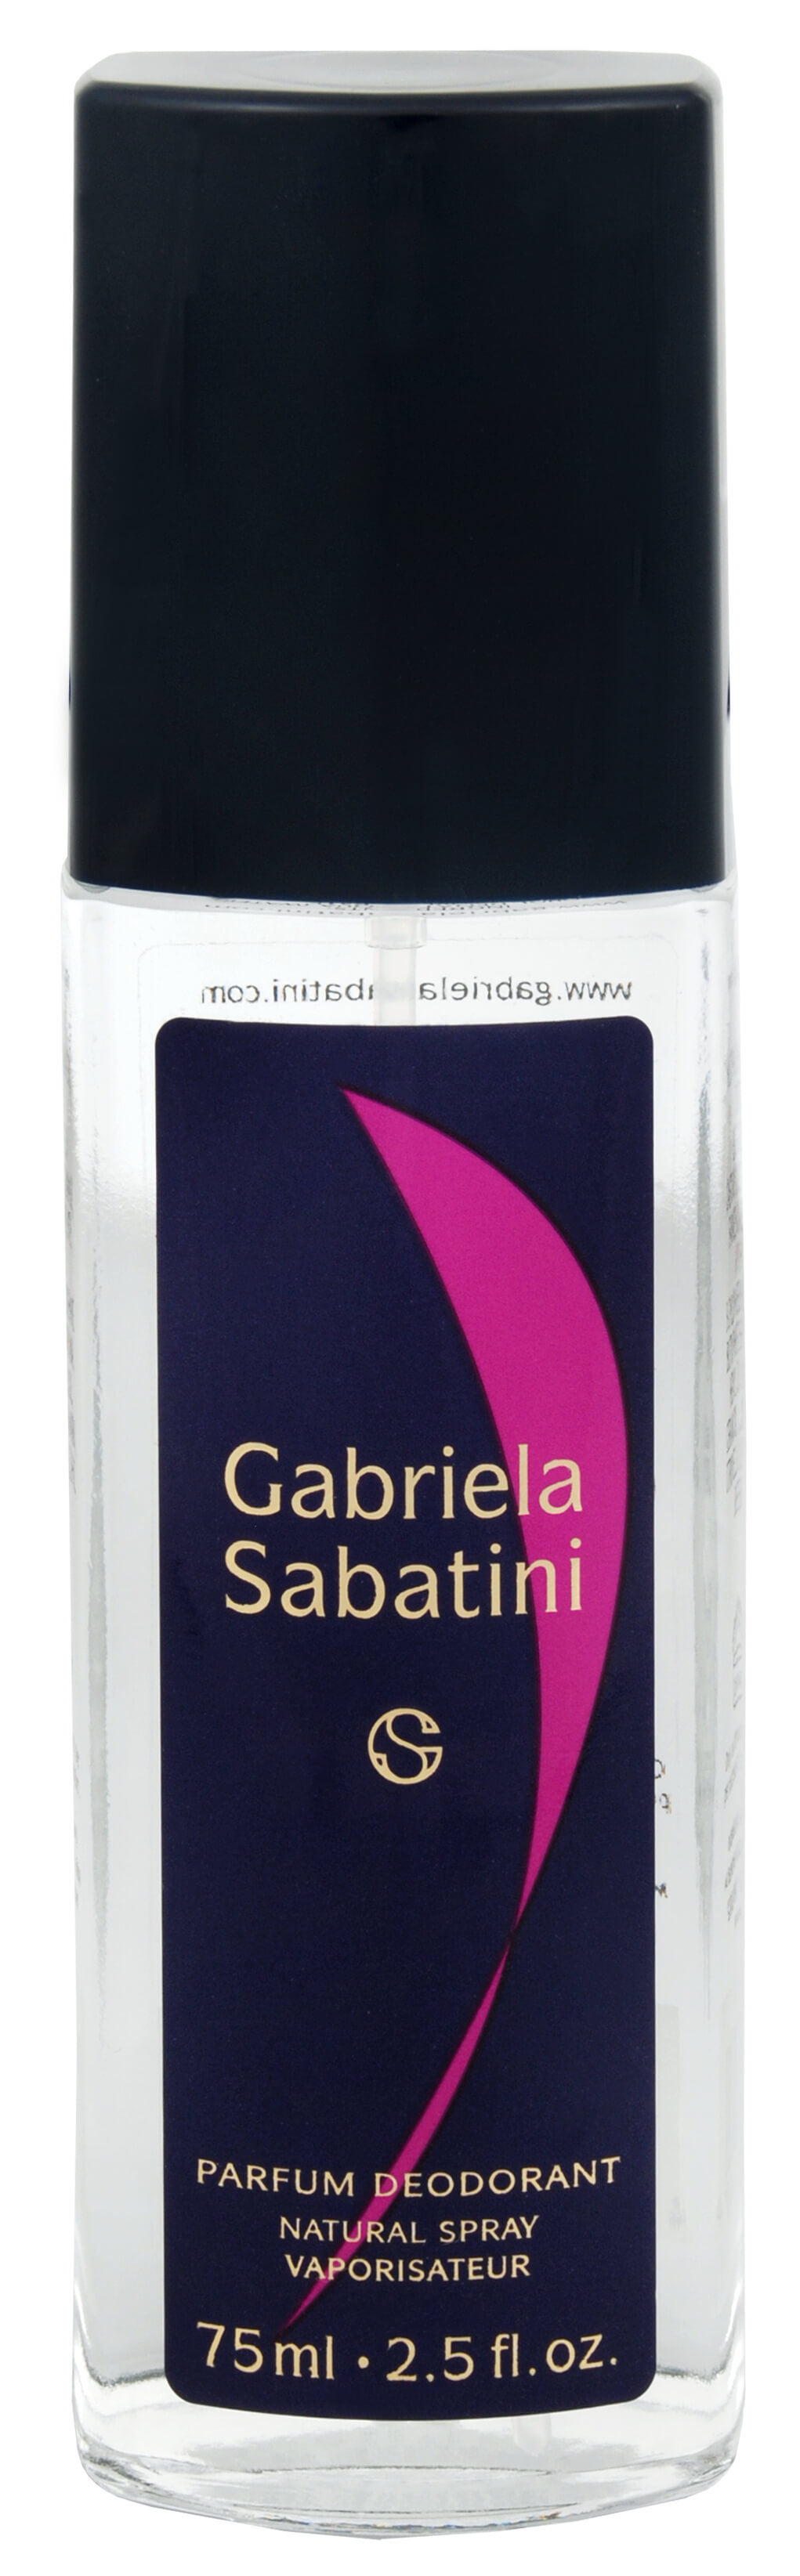 Gabriela Sabatini - deodorant s rozprašovačem